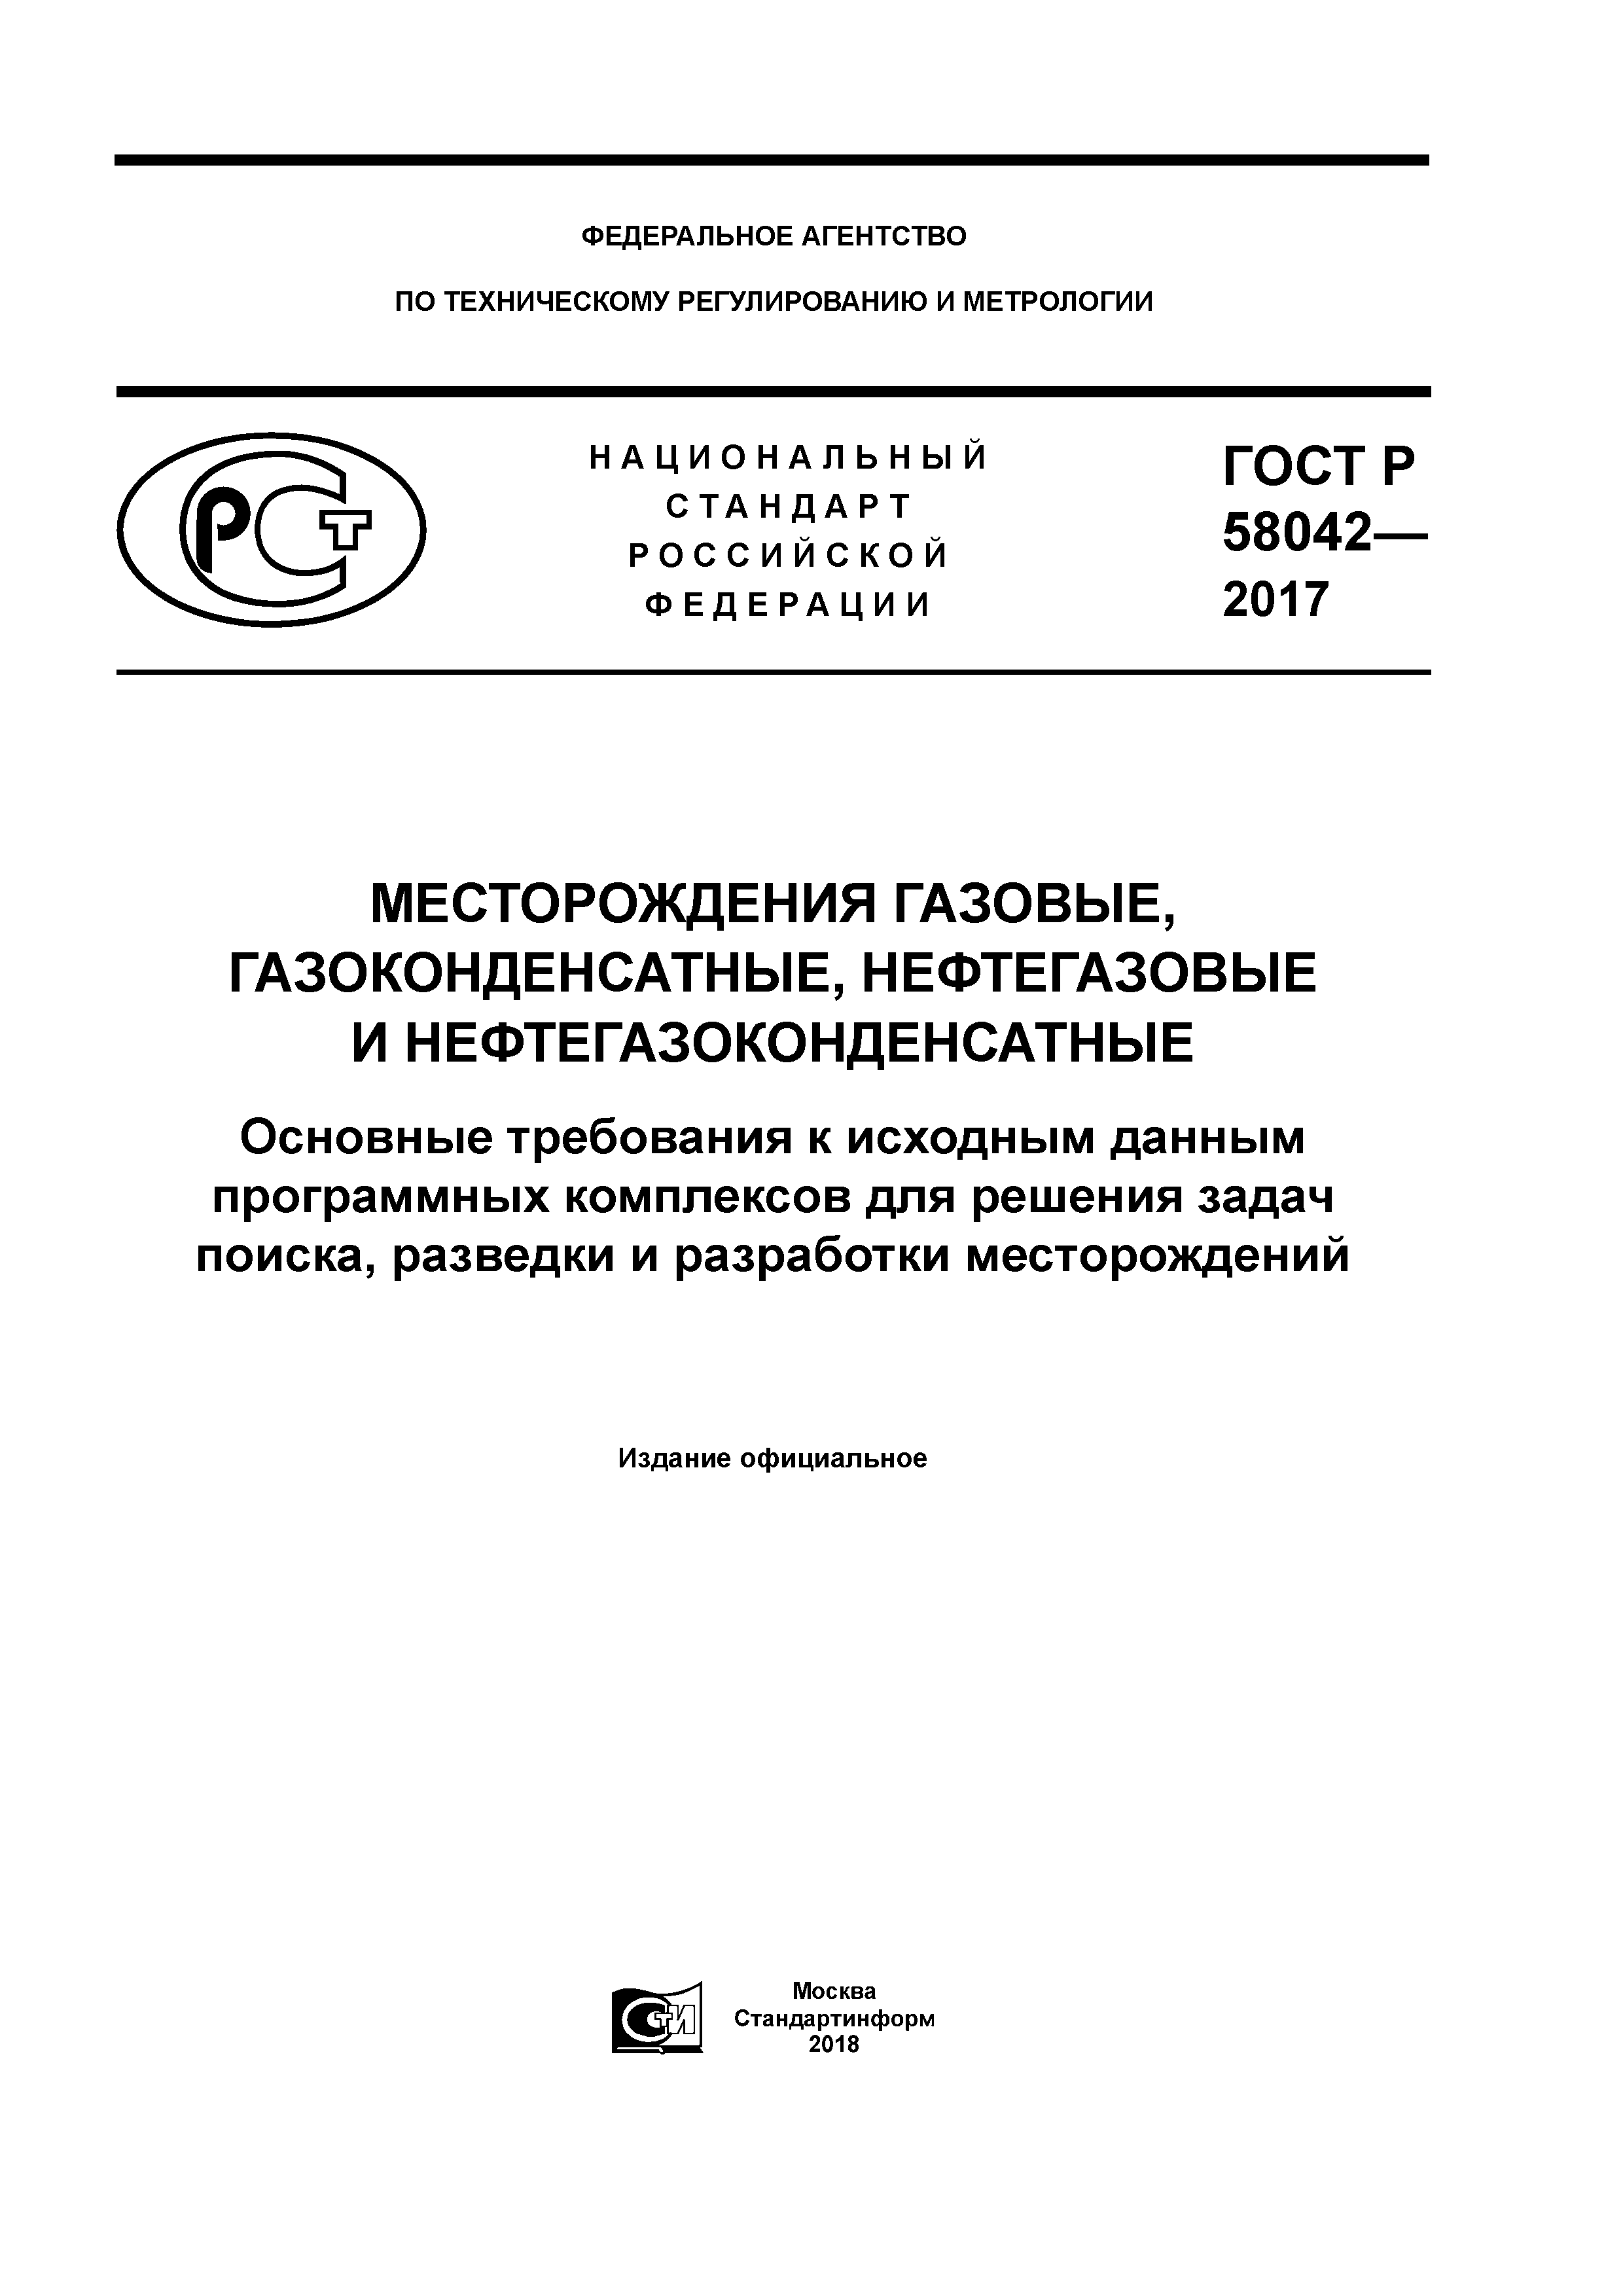 ГОСТ Р 58042-2017